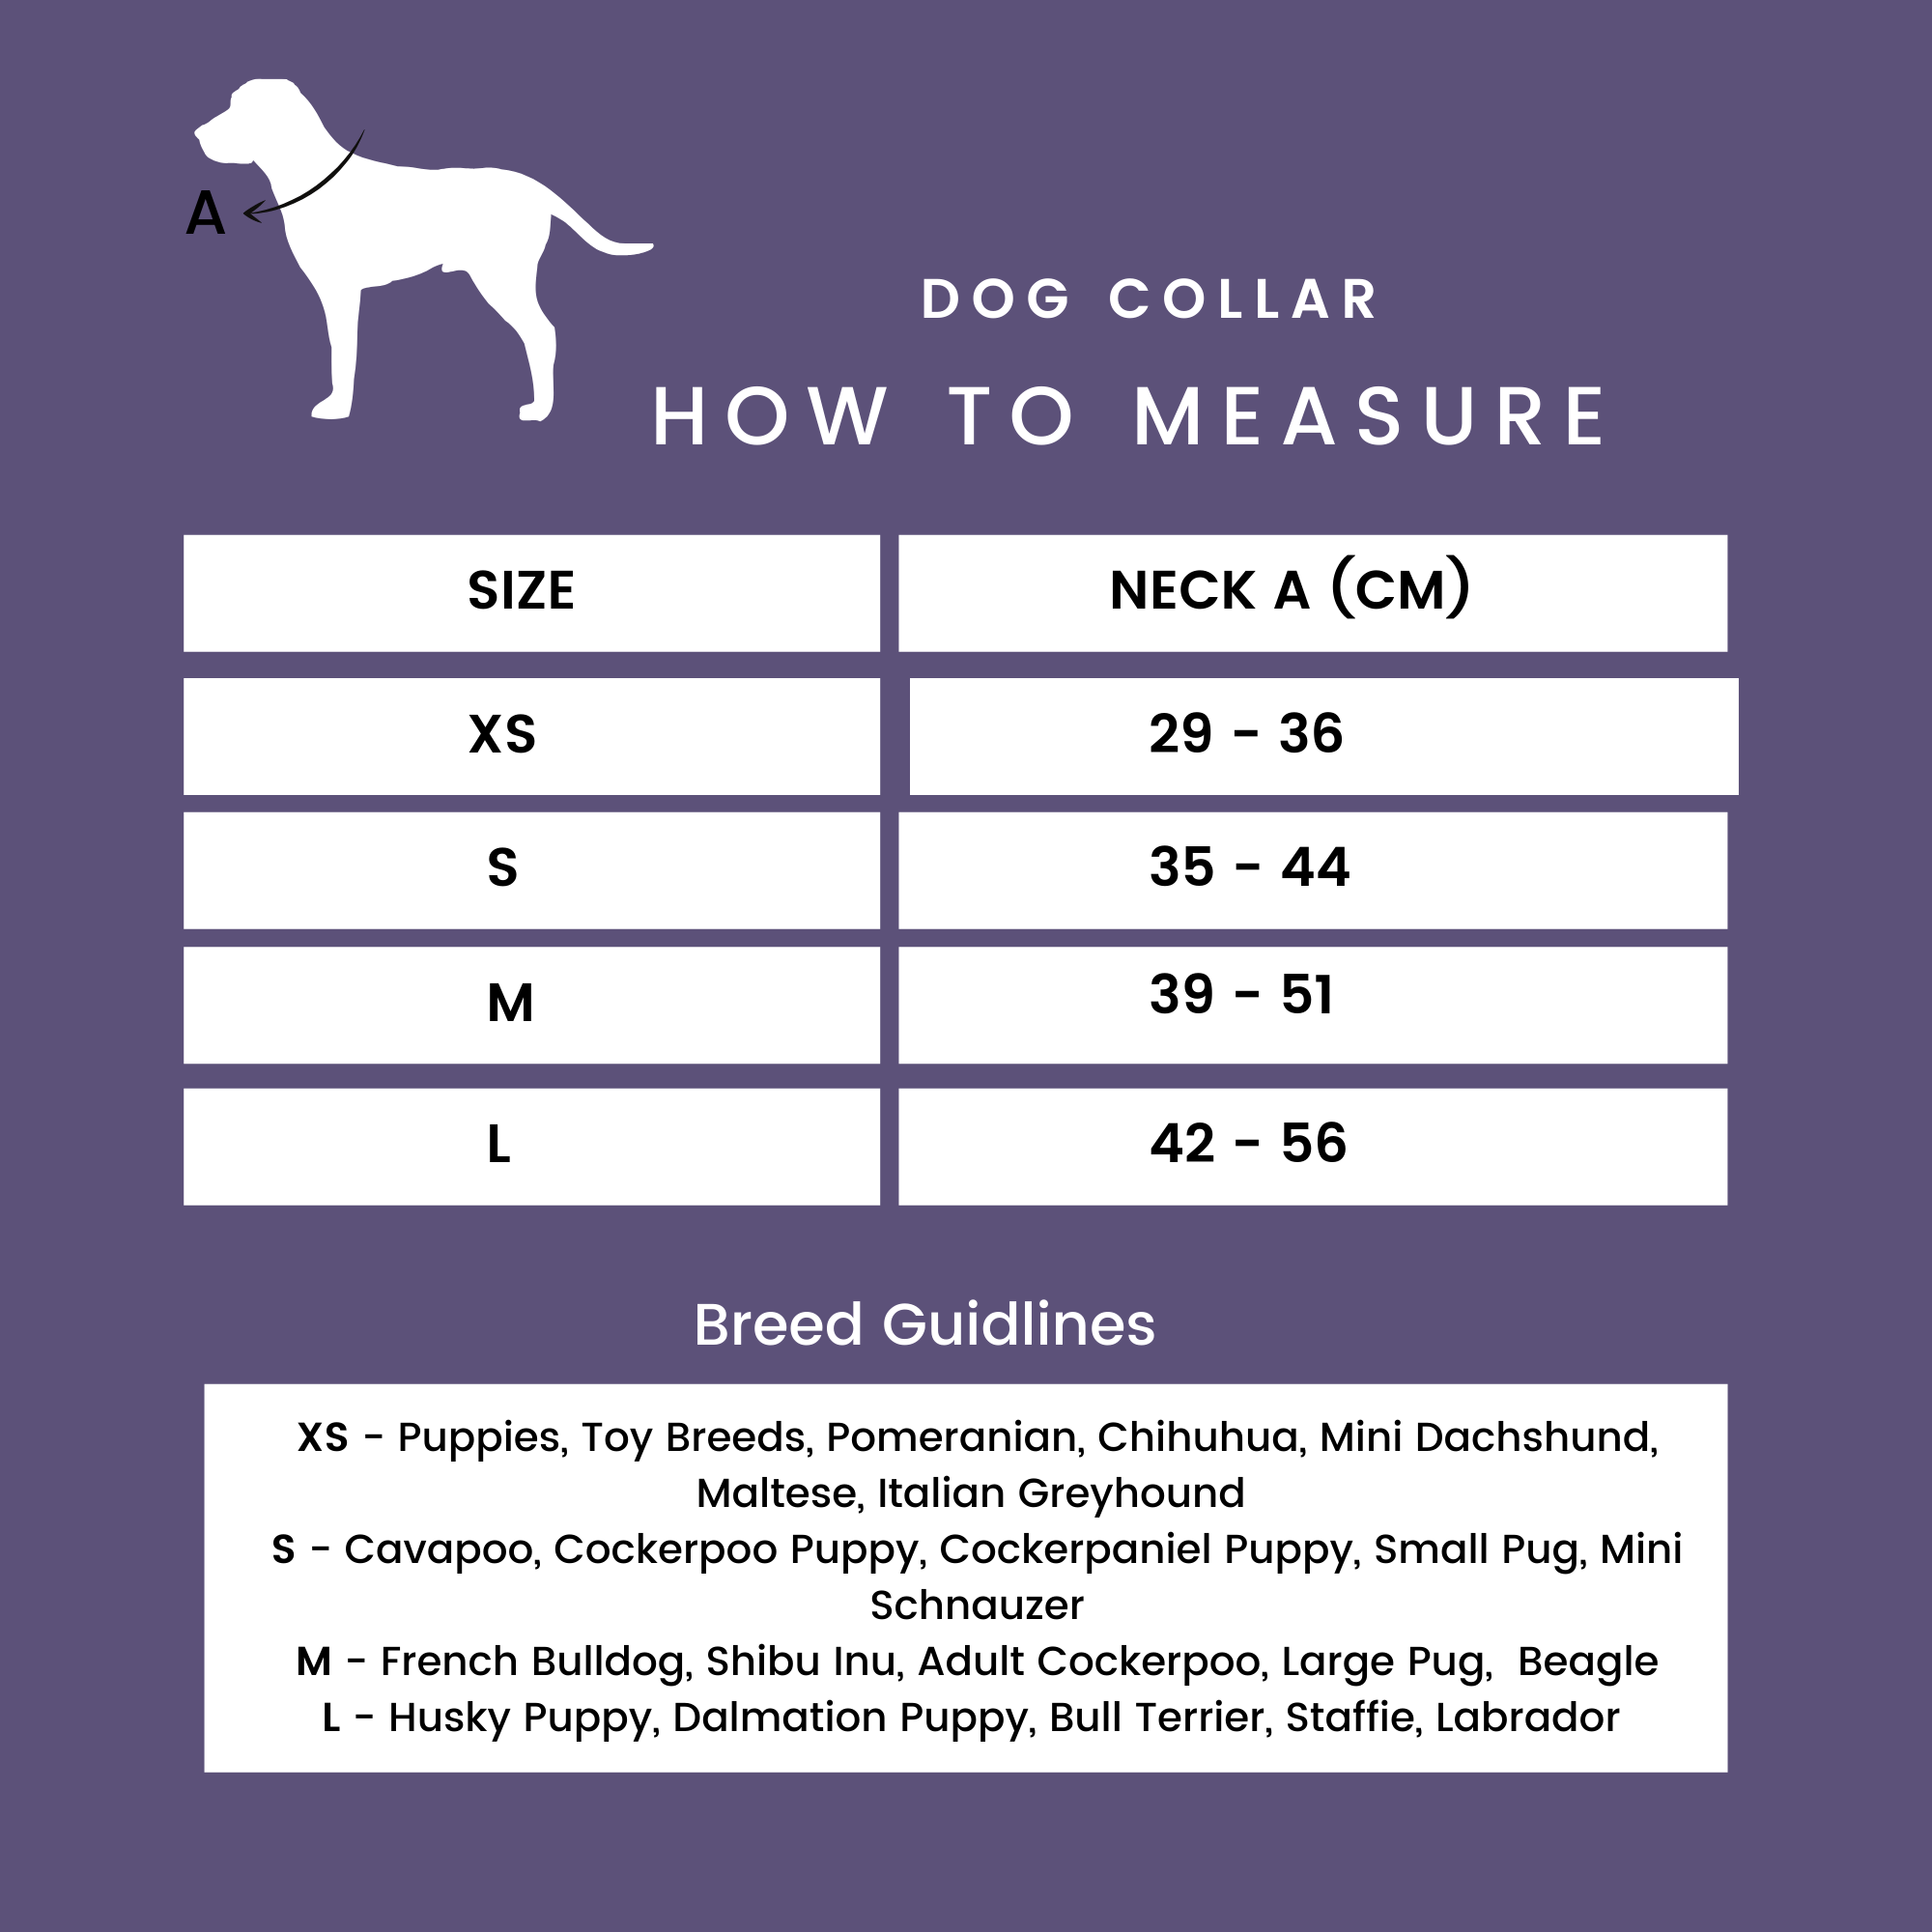 Black  / Grey Tartan Dog Harness Bundle